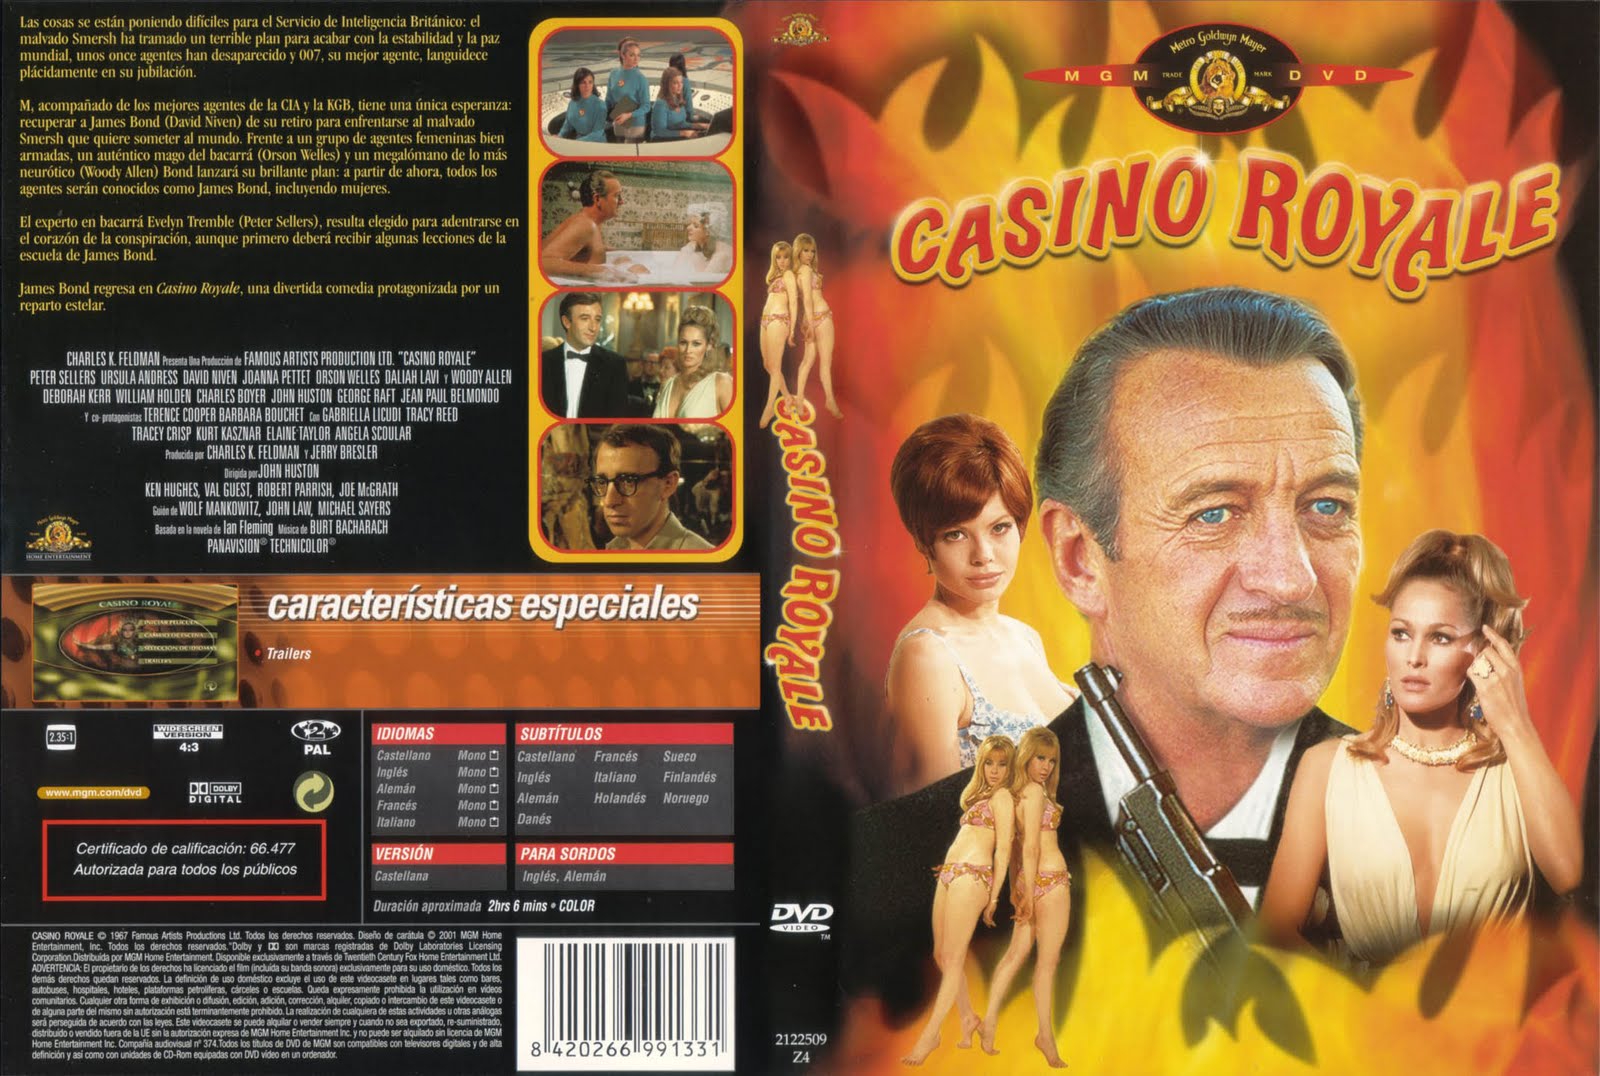 https://blogger.googleusercontent.com/img/b/R29vZ2xl/AVvXsEjVHitZ4ctr71ntICDC2HhTpSYcfRtCbhgXqehQS3bzSuA5k1tAjzPk4hSrnHugzz5IYWL8LdjgI2vepsImQd3RhJLyiV0R1kewMdgHIbdtt7shyphenhyphen4LZHP857kvNey7qMKZ-b064CG5nVNO0/s1600/Casino_Royale-Caratula.jpg